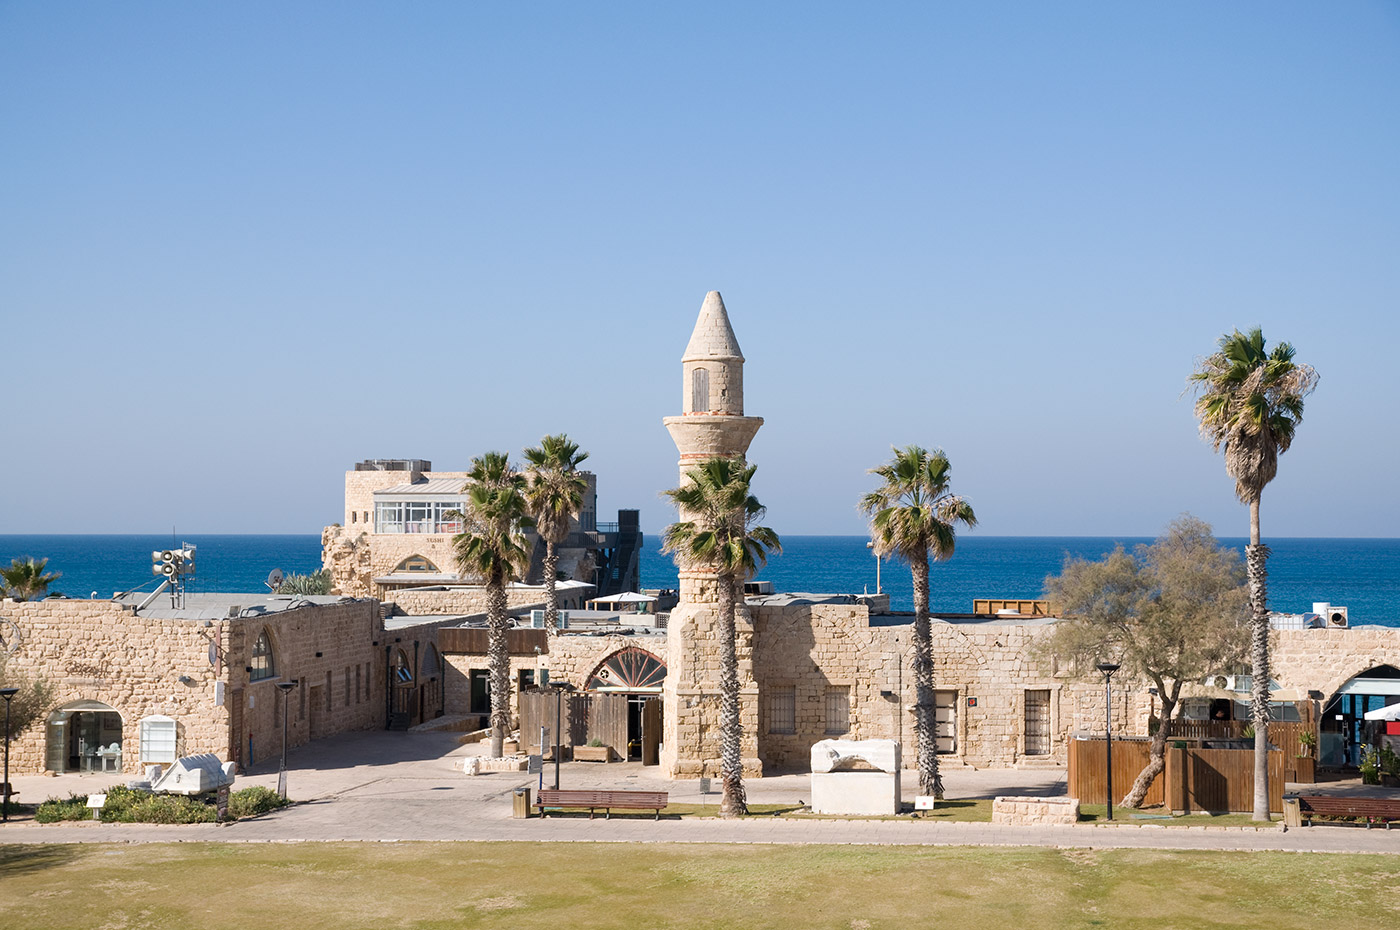 Caesarea- a Roman ancient town